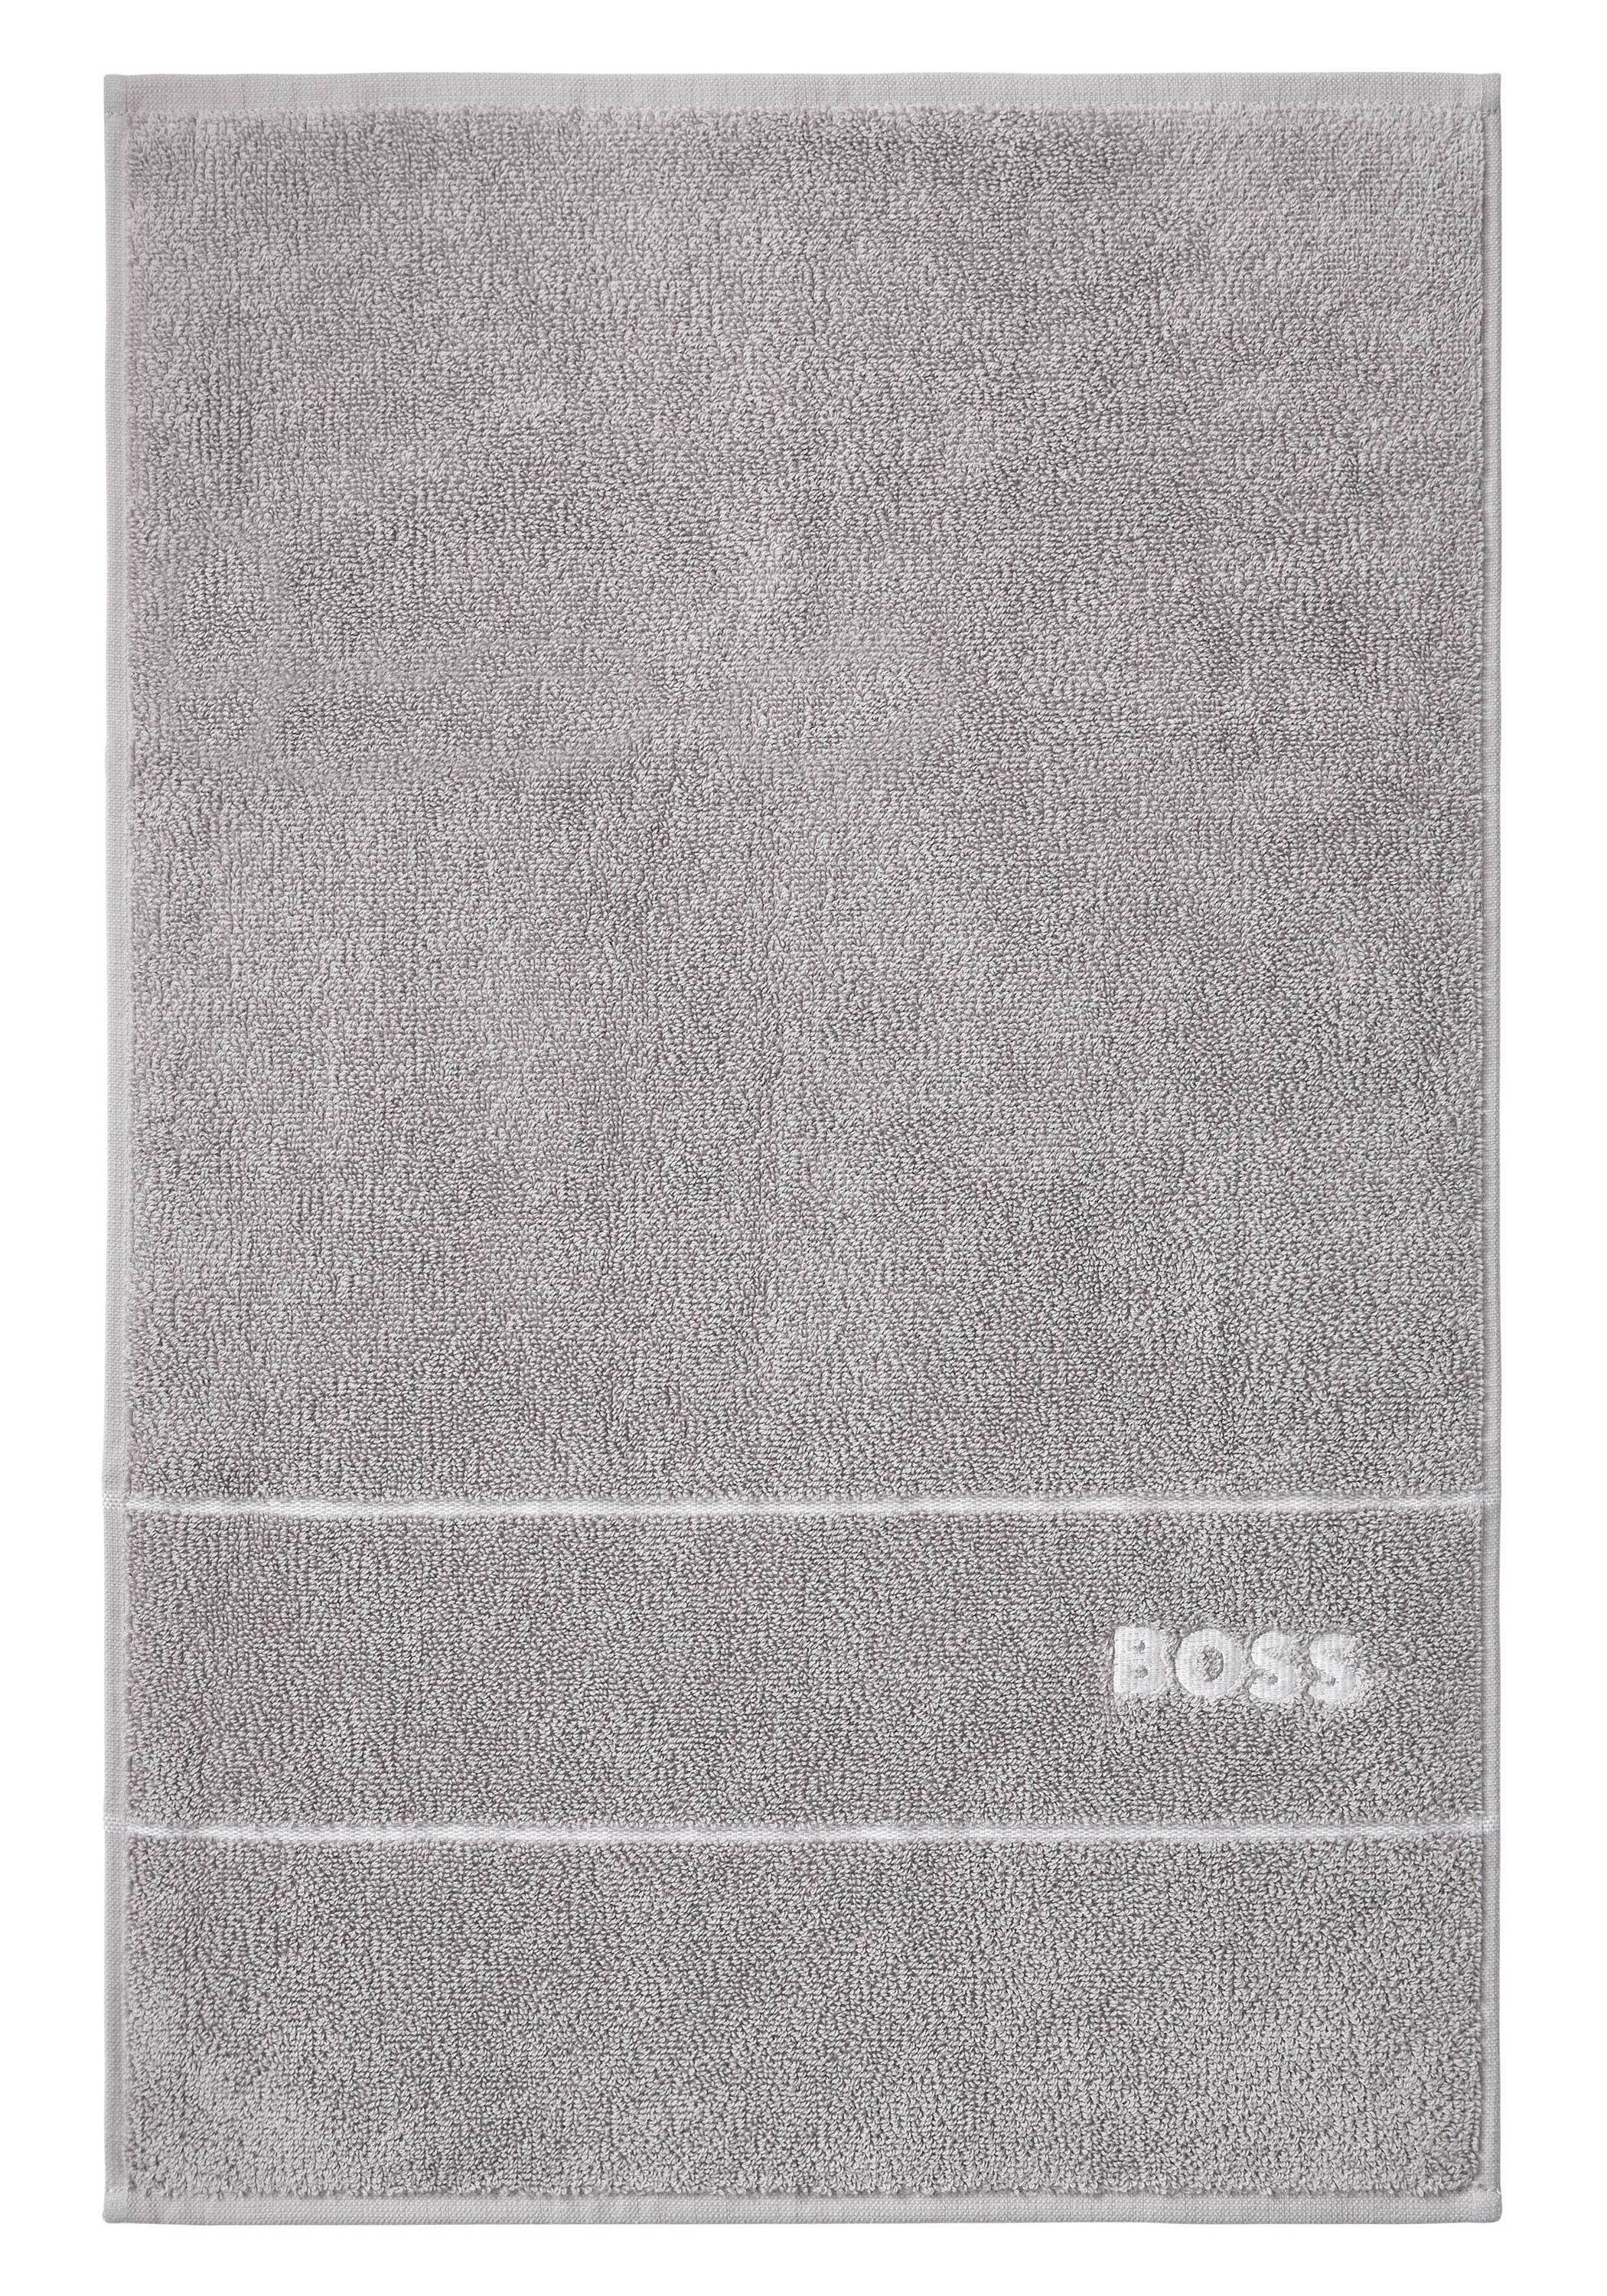 Hugo Boss Home Gästehandtücher PLAIN (2tlg), 100% Baumwolle, mit modernem  Design